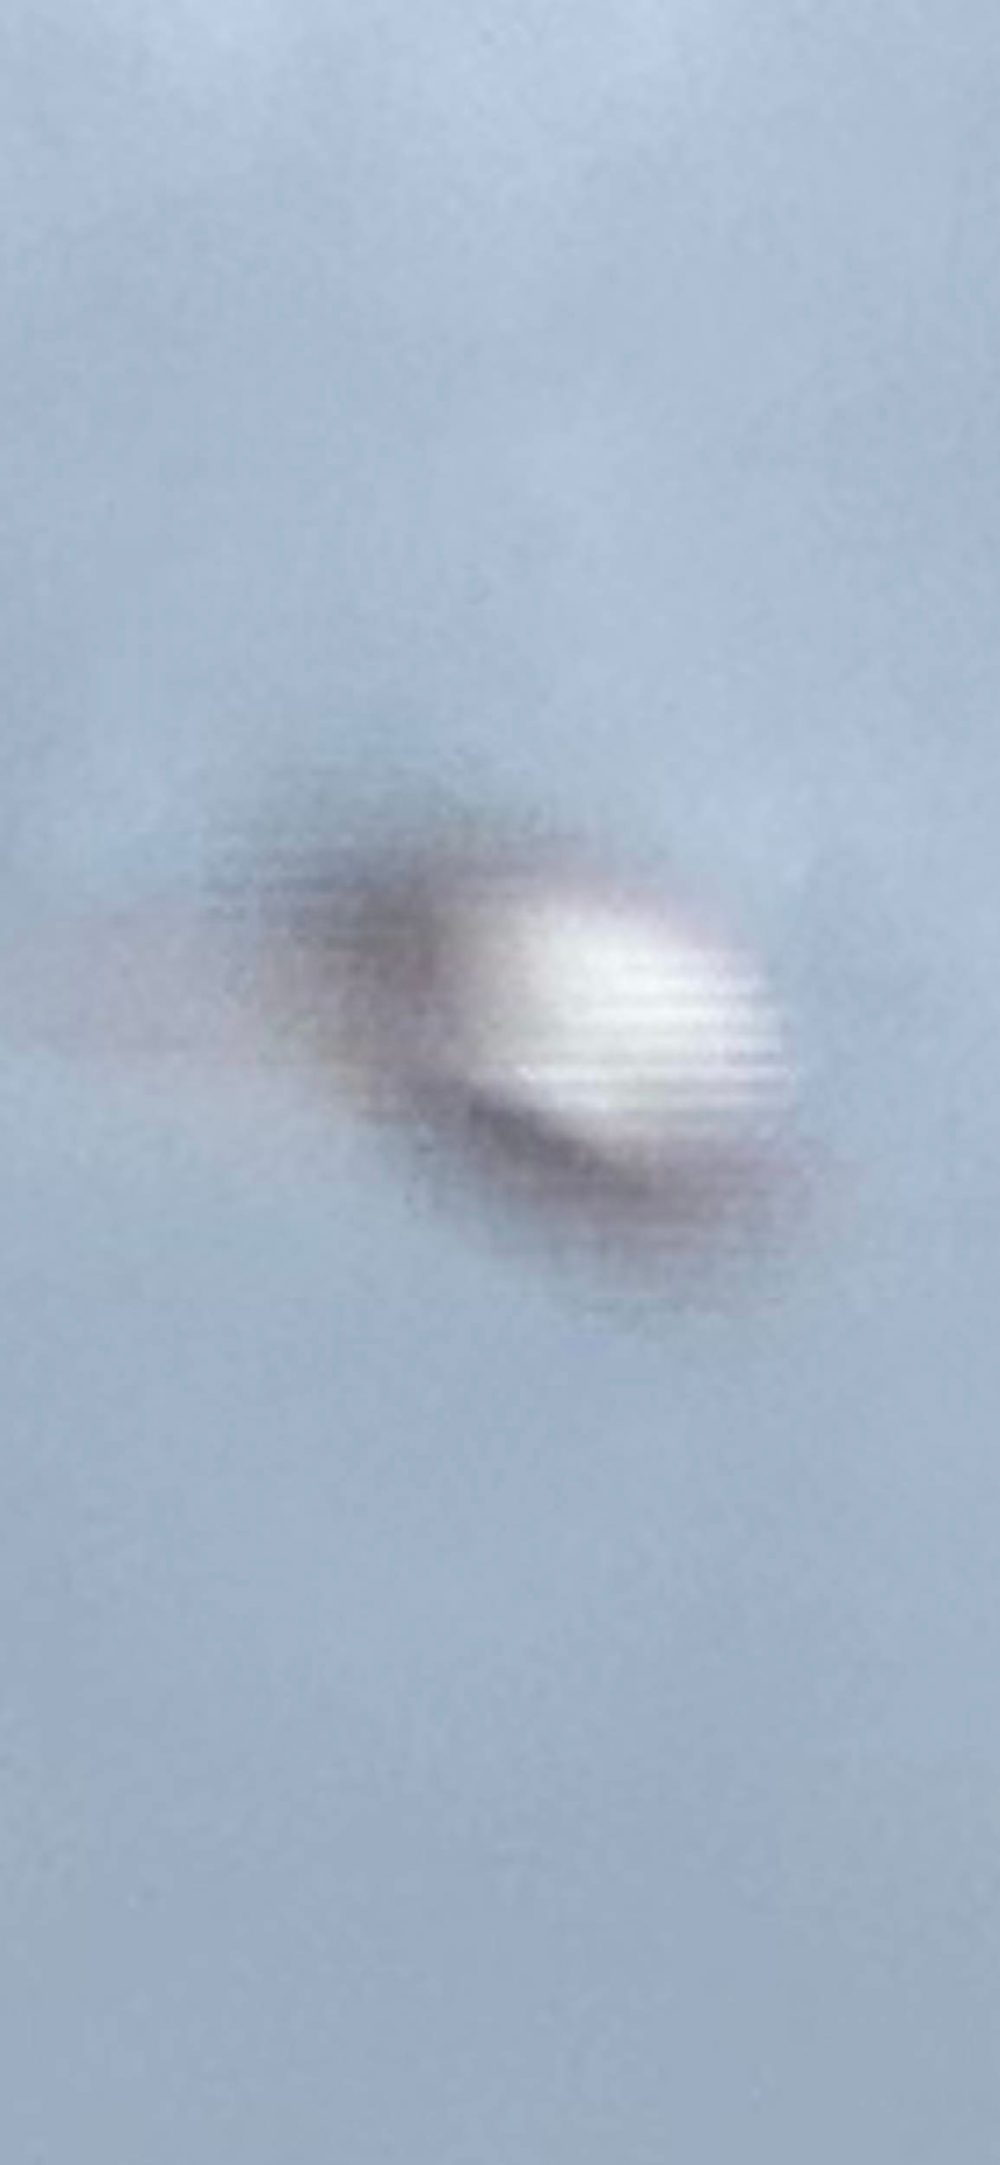 The unidentified silver object | UFO News UK